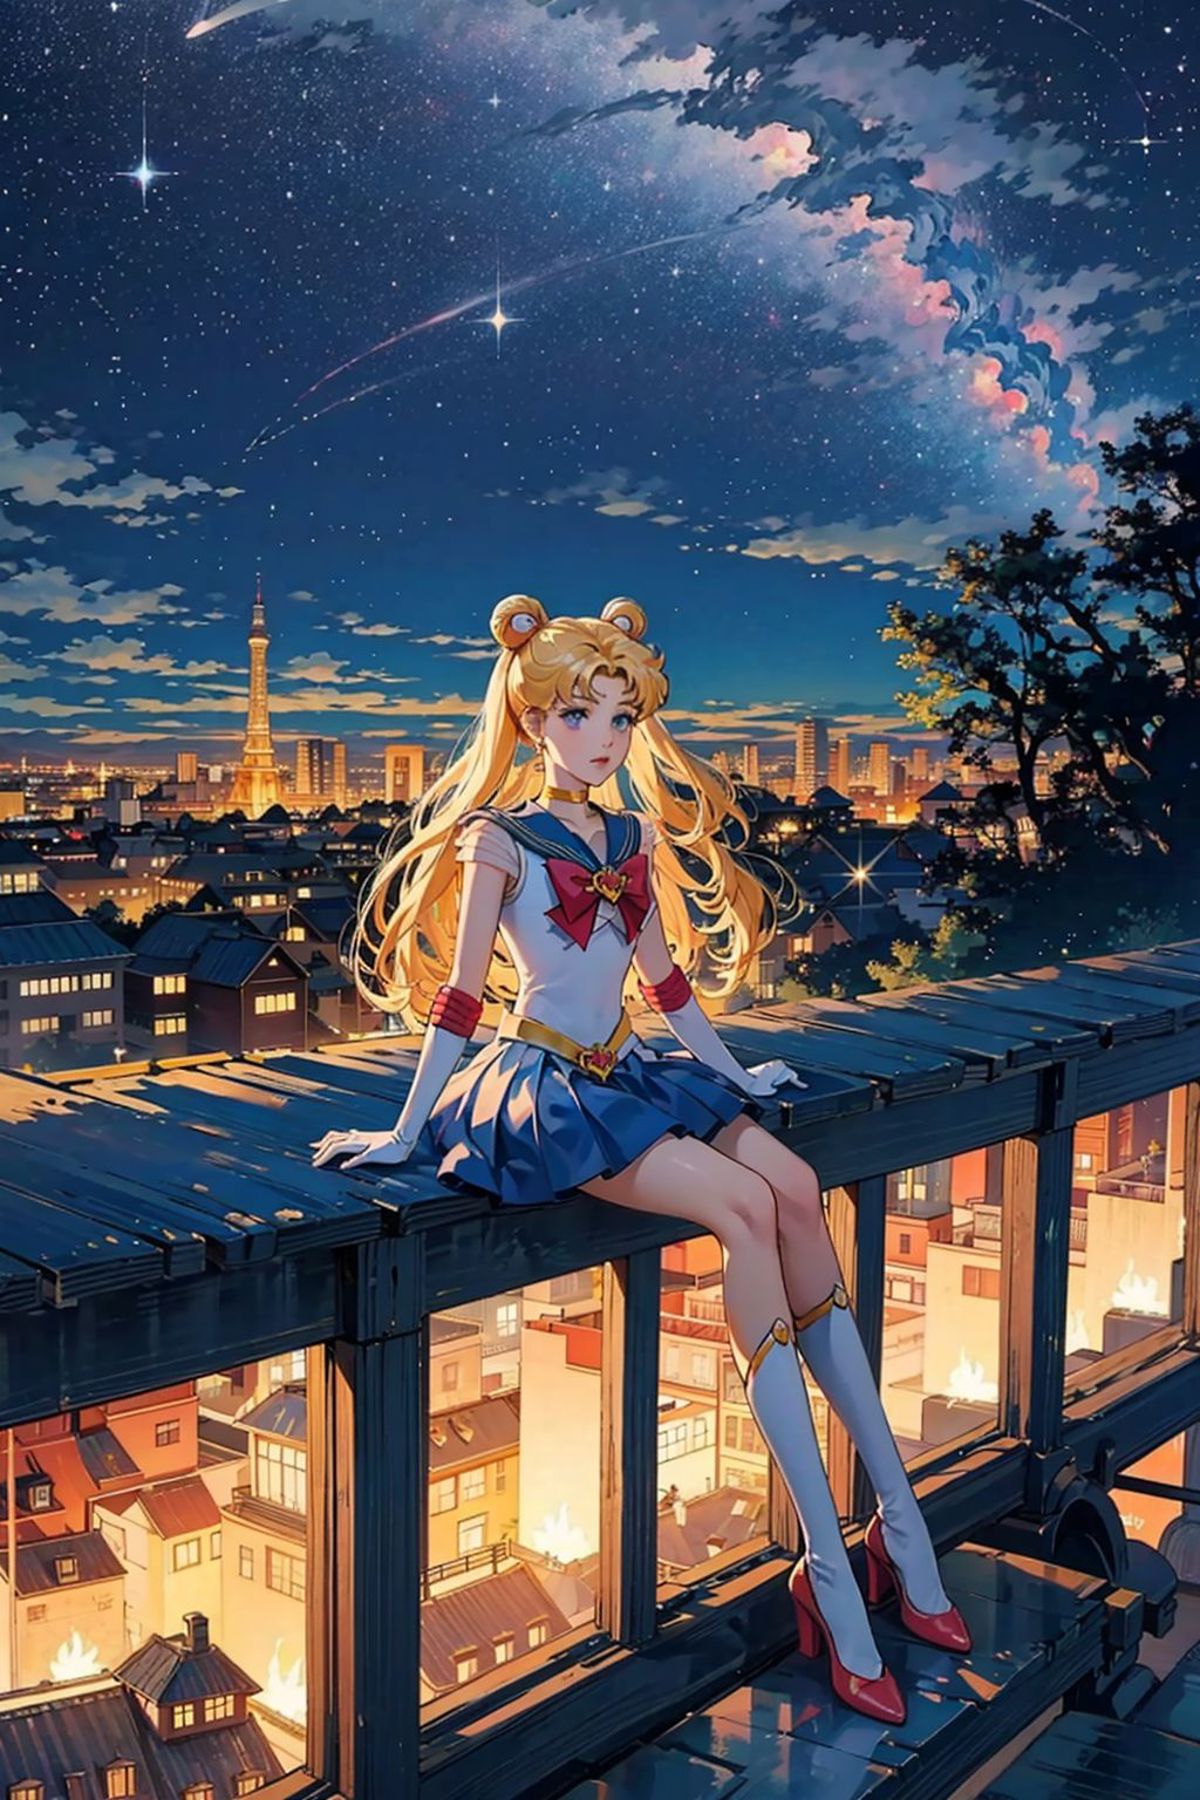 Super Sailor Moon LoRa image by ChaosOrchestrator